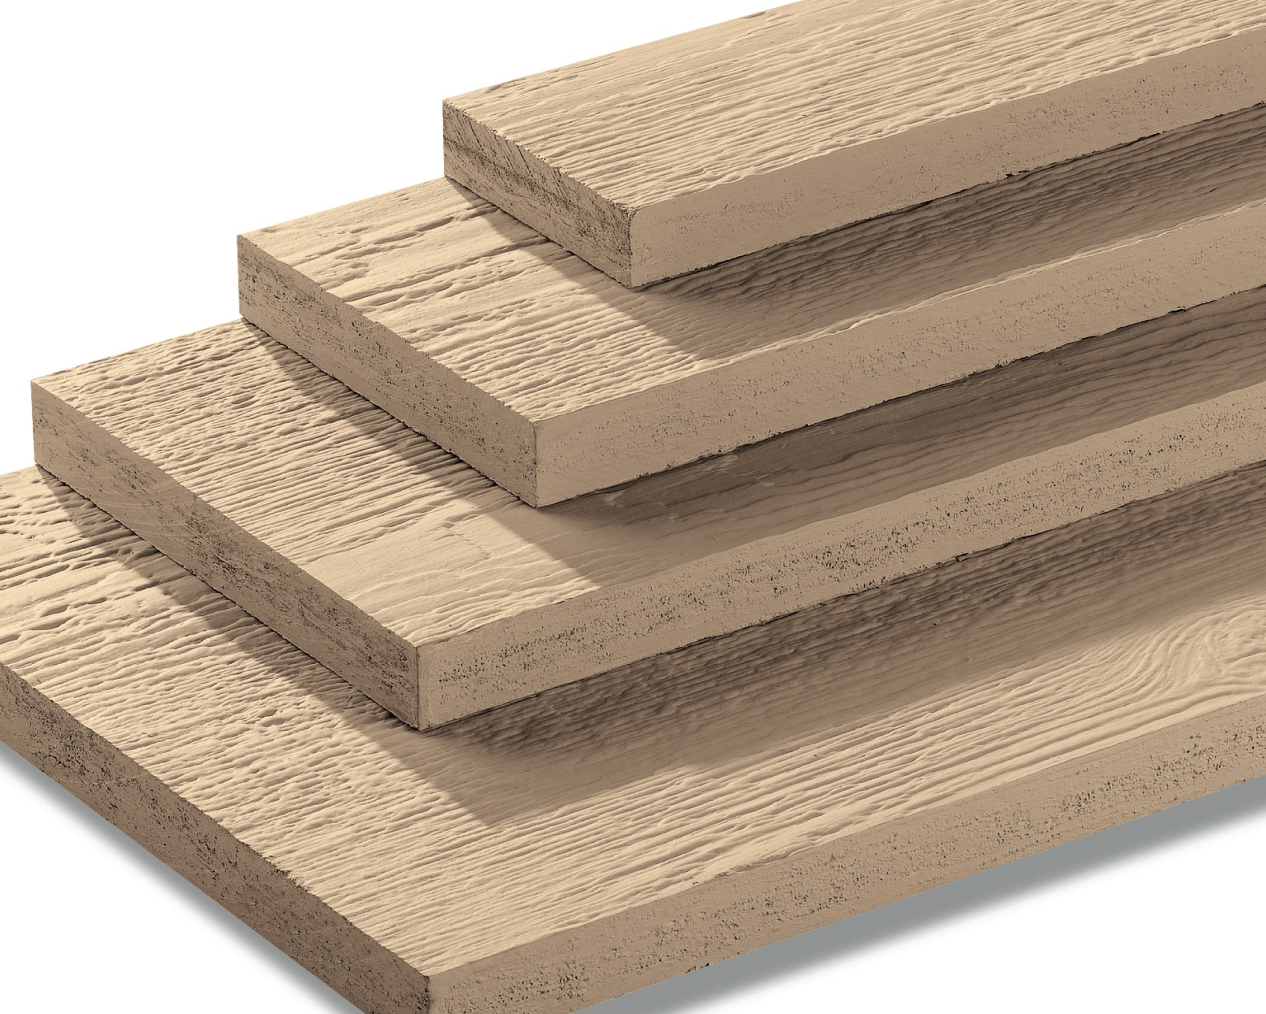 A pile of LP Smartside wood panels.